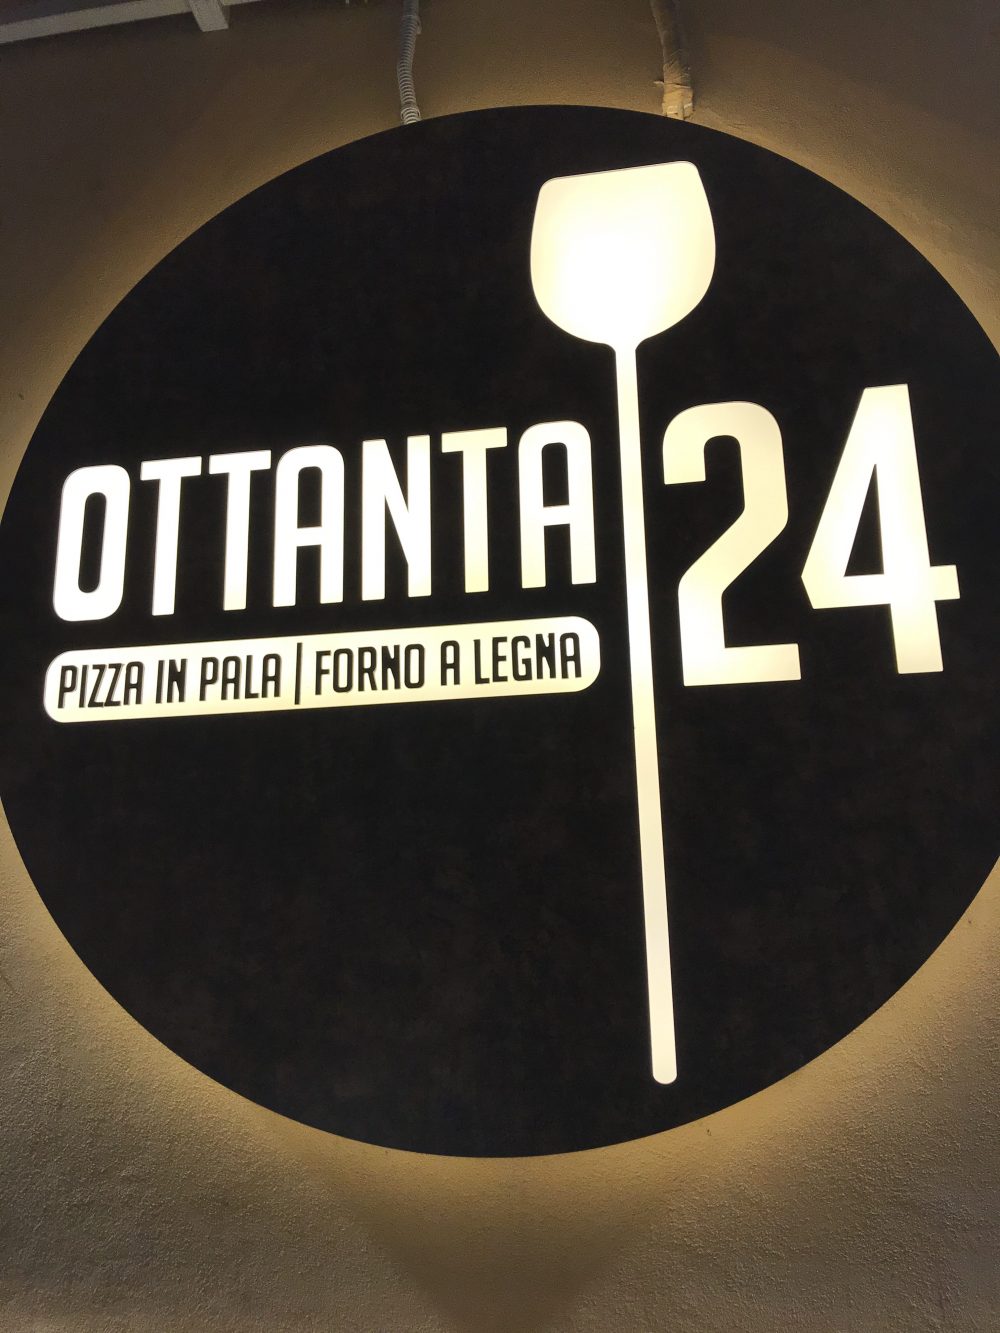 Pizzeria Ottanta 24